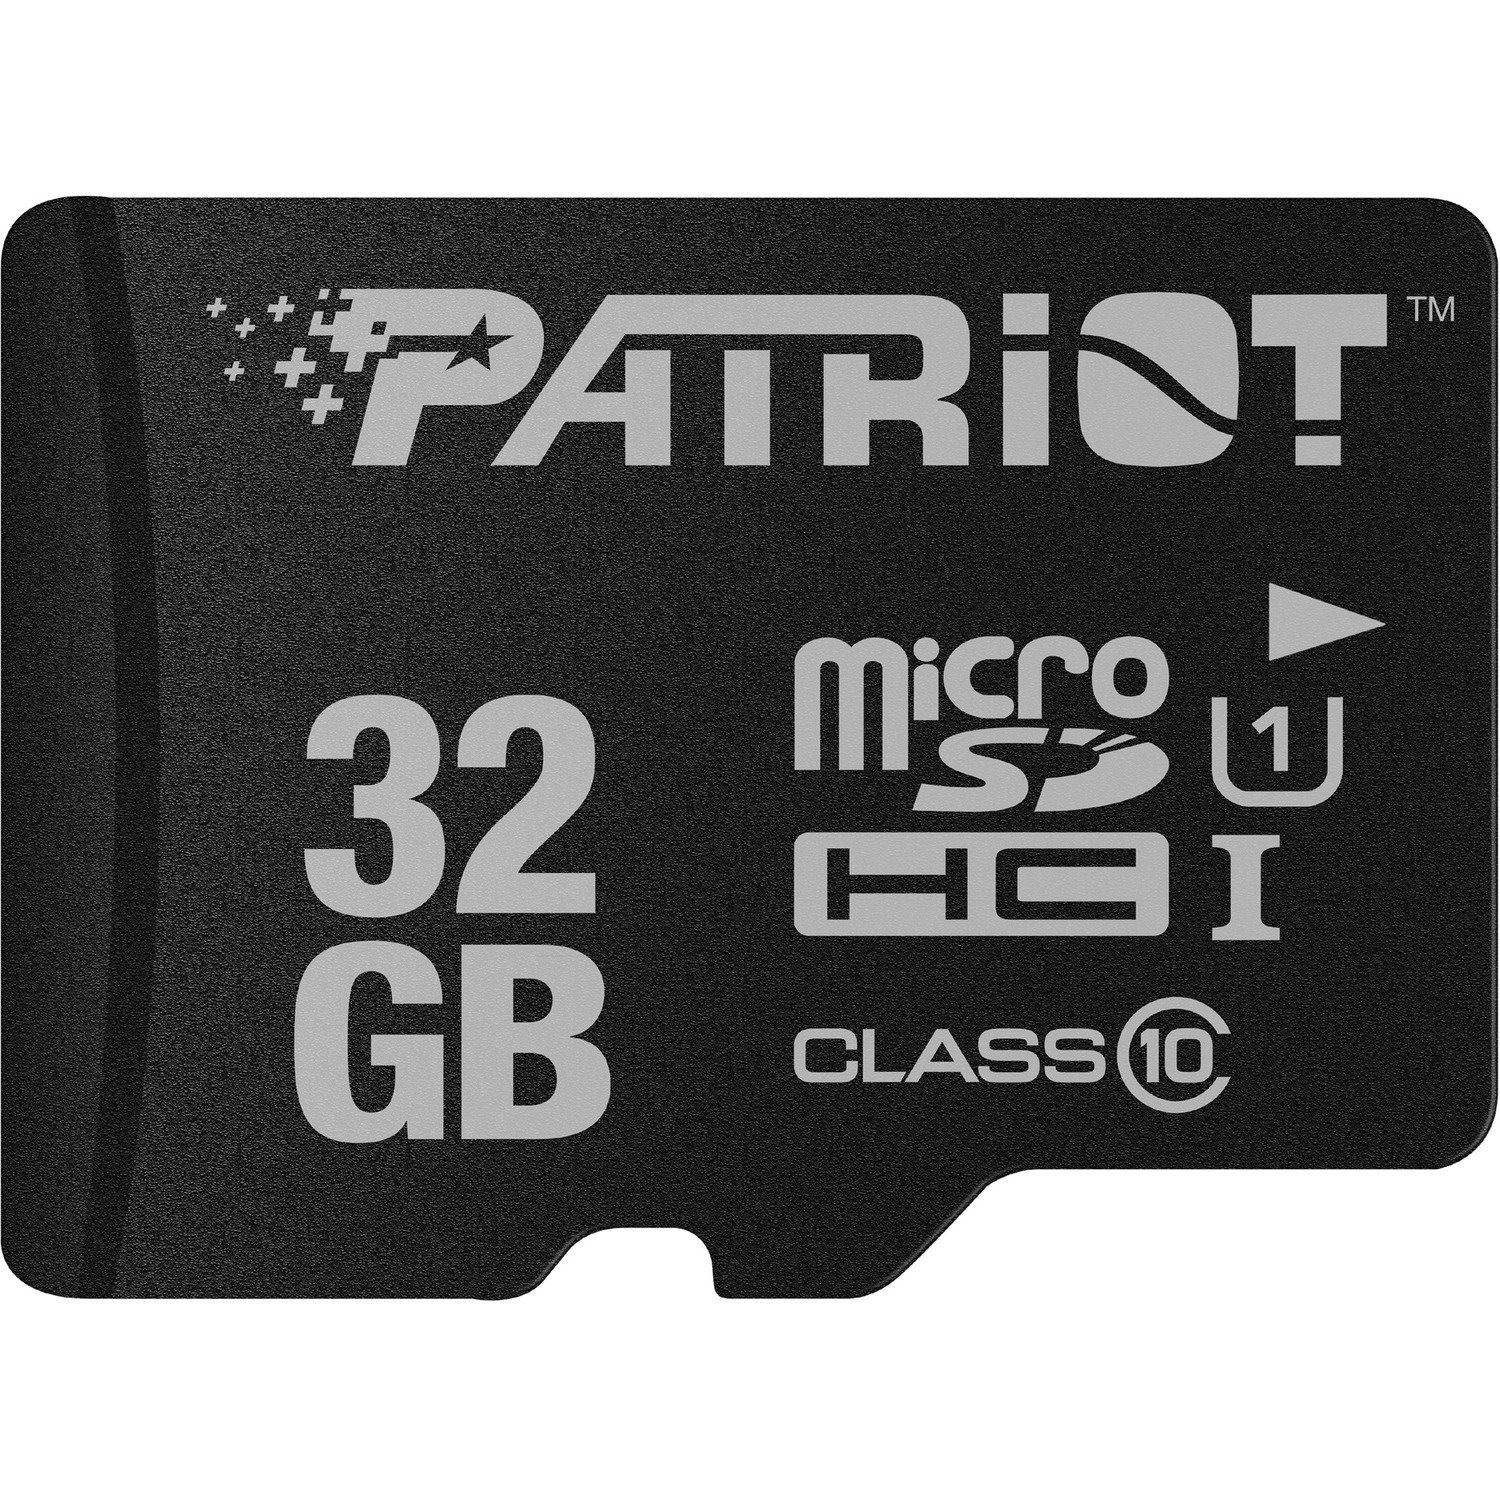 Patriot Memory 32 GB Class 10/UHS-I (U1) microSDHC - 1 Pack